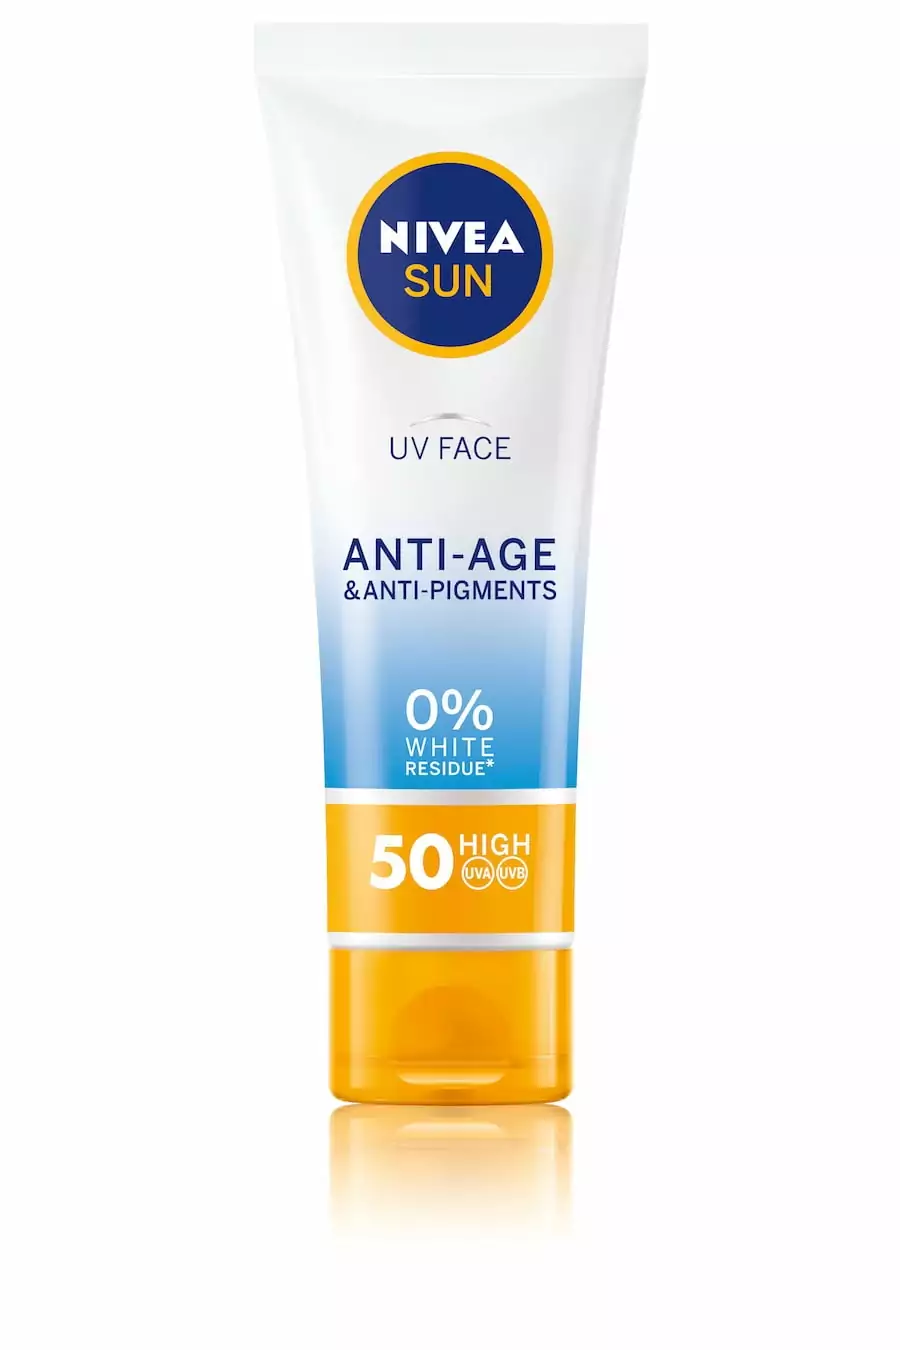 Nivea Sun UV Face Mattifying Fluid SPF 50 - Summer Sunscreen in India